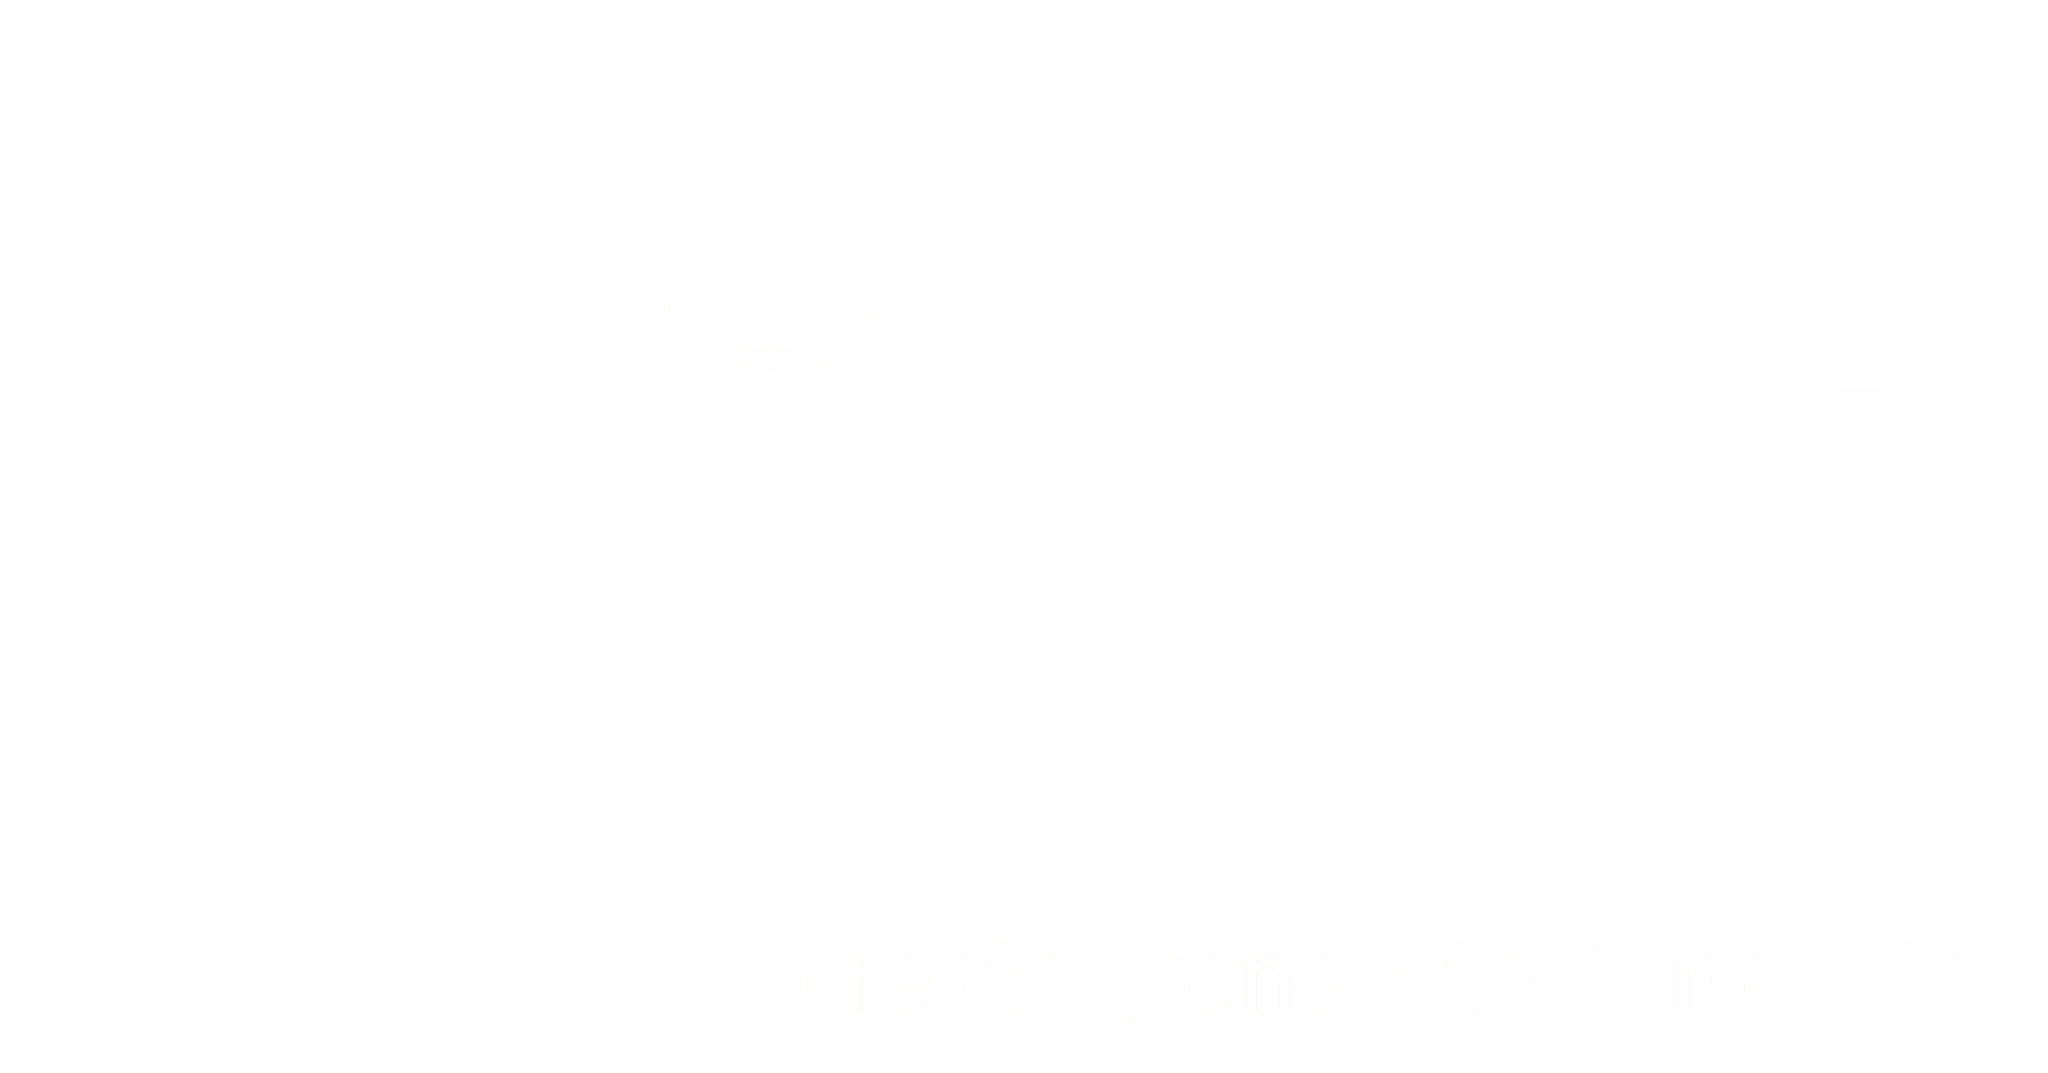 Stanwell Corporation logo